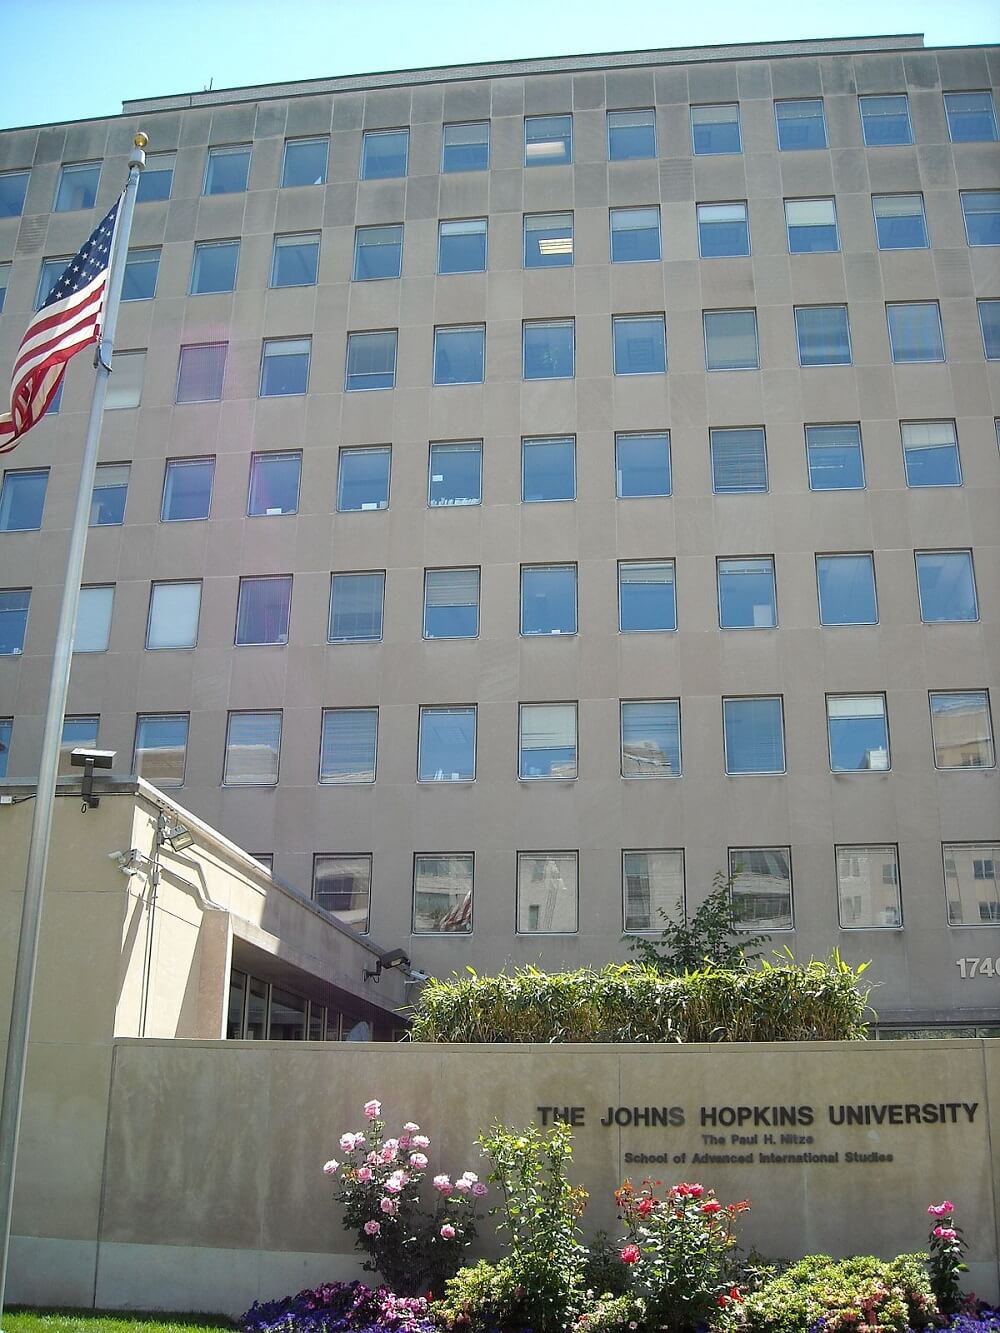 Johns Hopkins University School of Advanced International Studies buildings